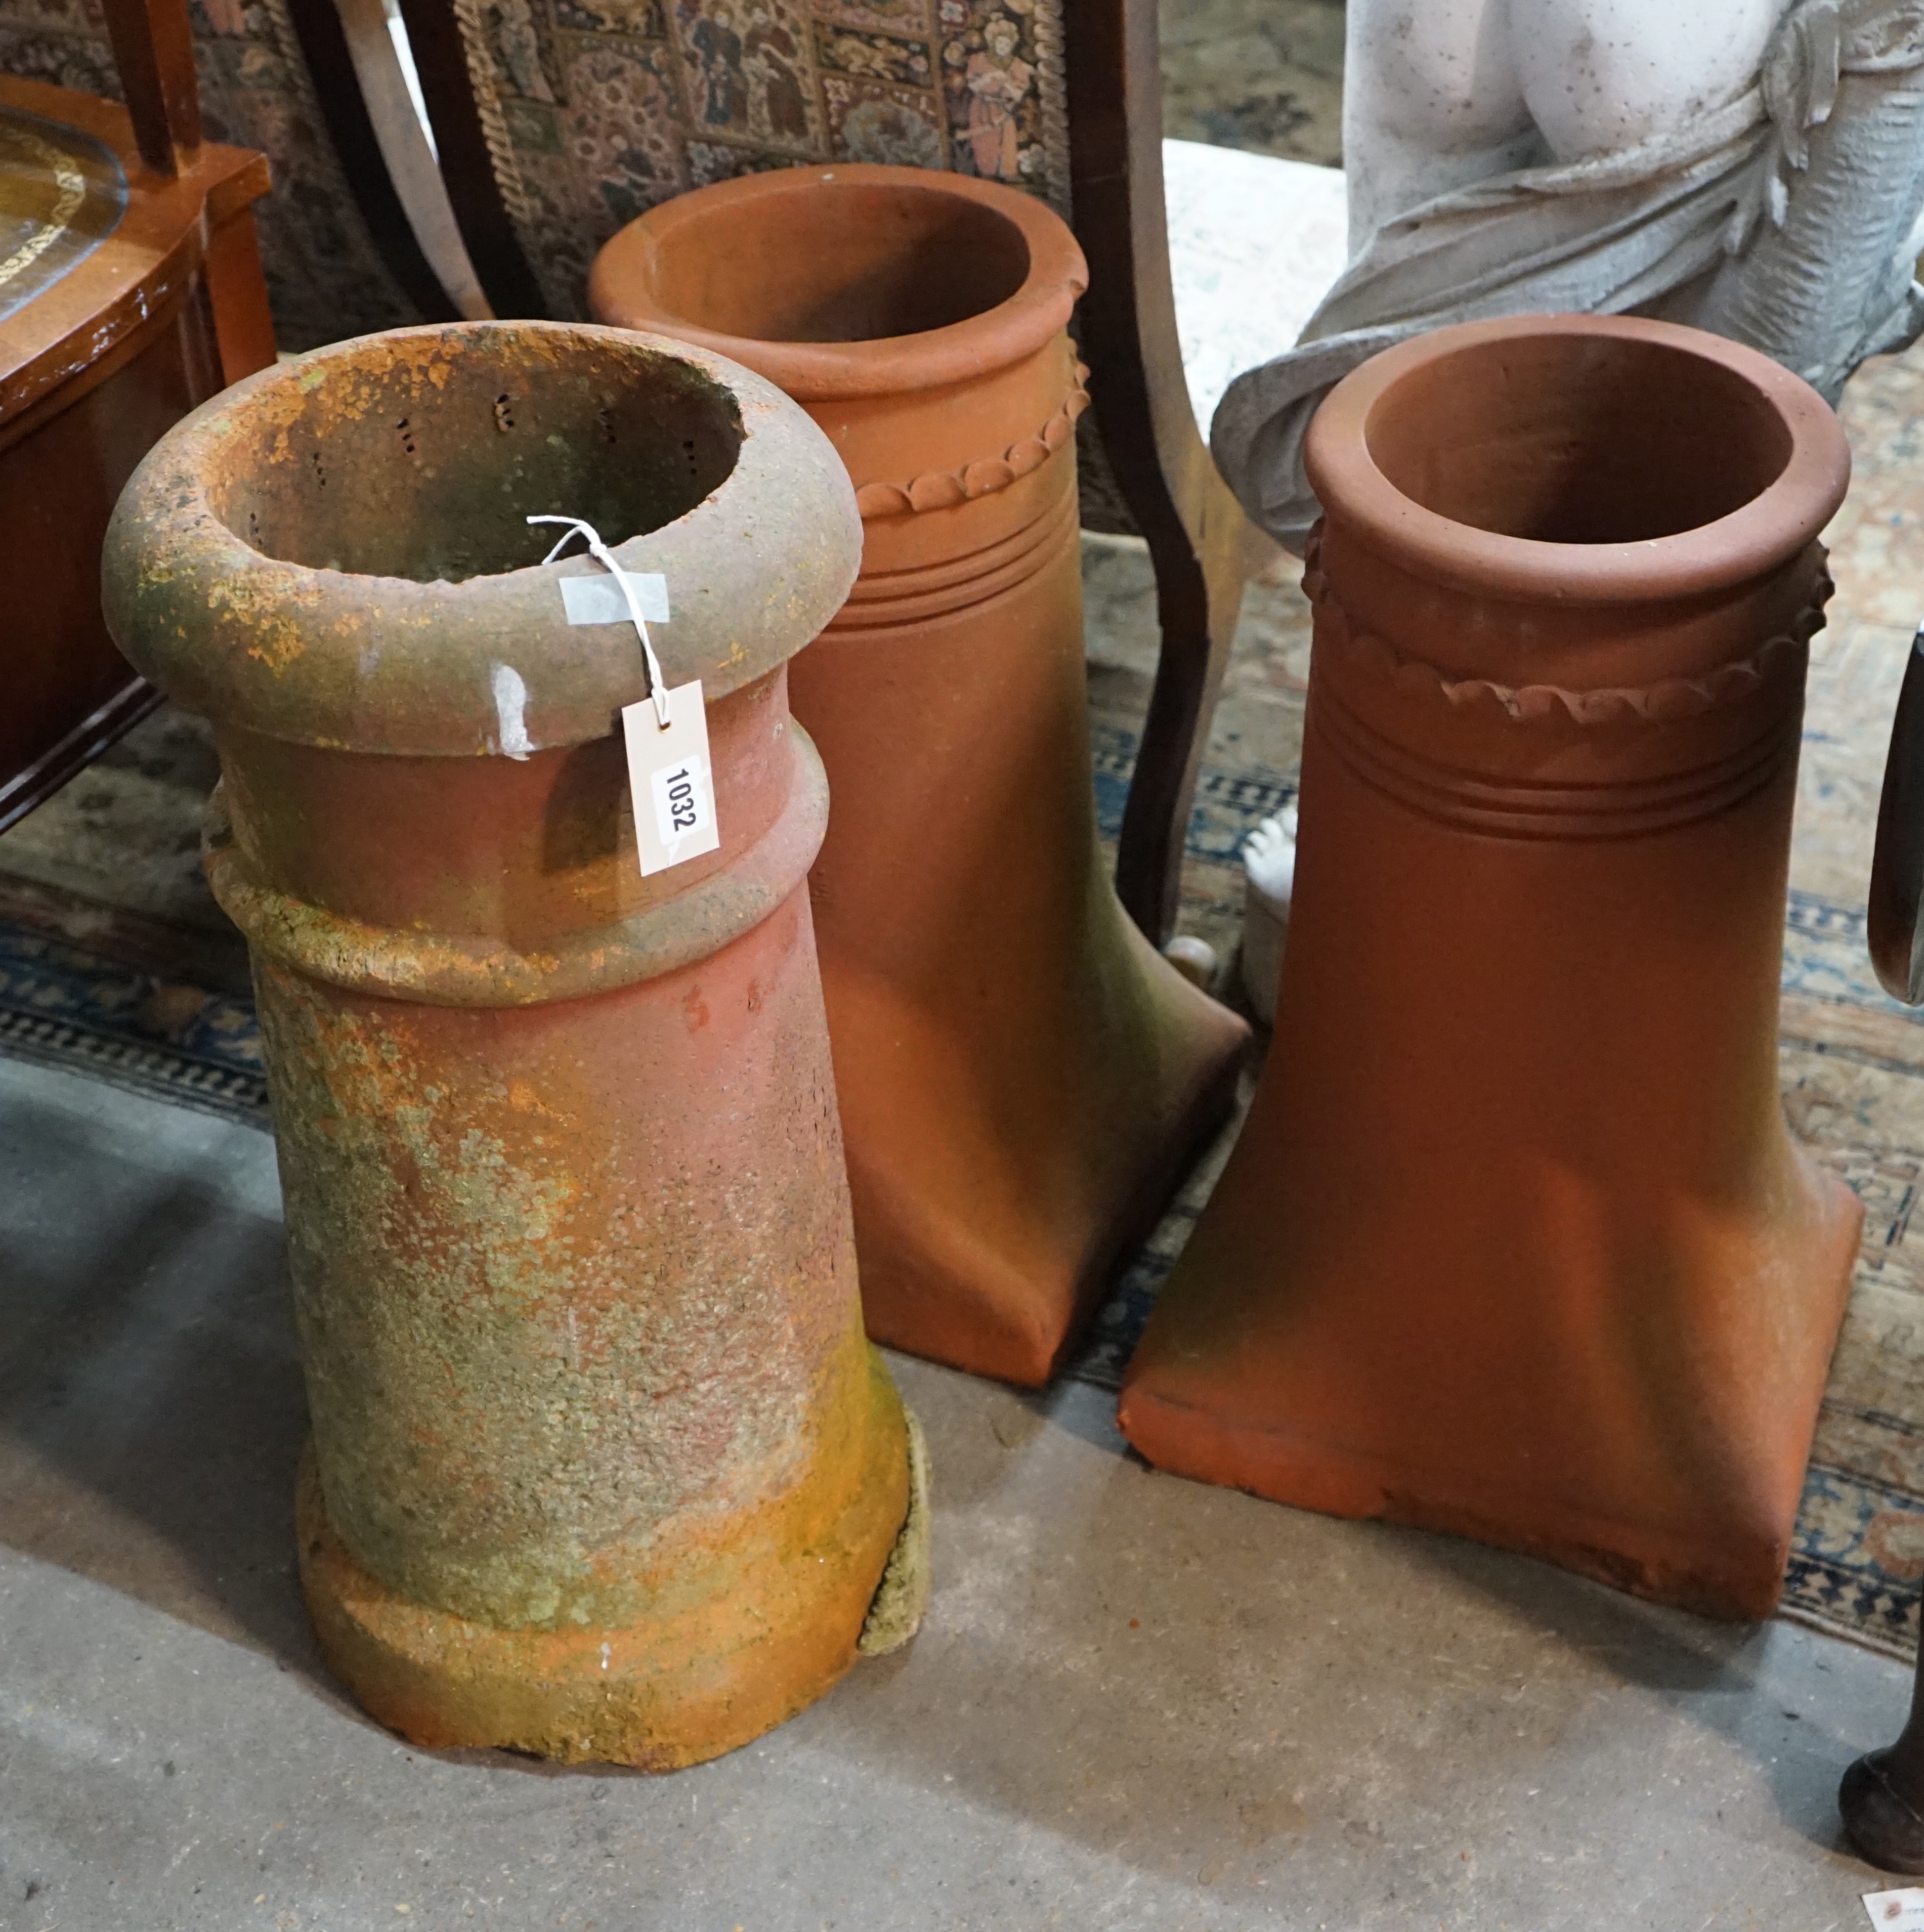 Three terracotta chimney pots, largest height 62cm